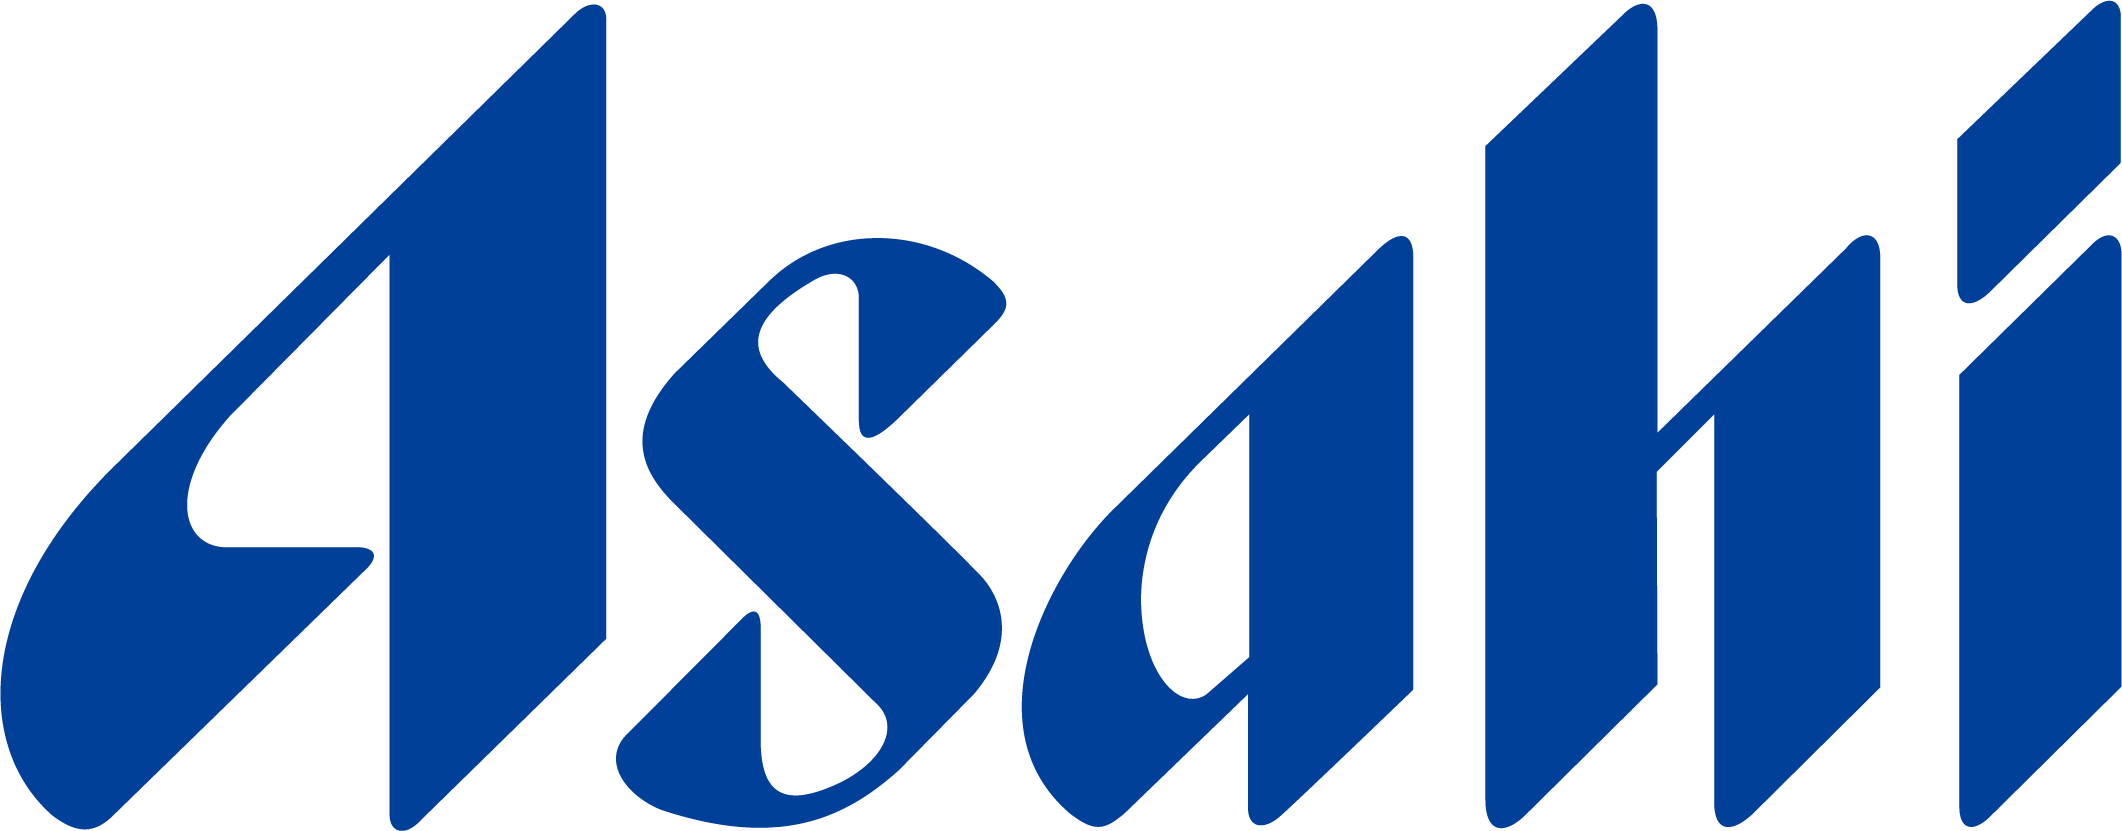 023 – Asahi Group Holdings